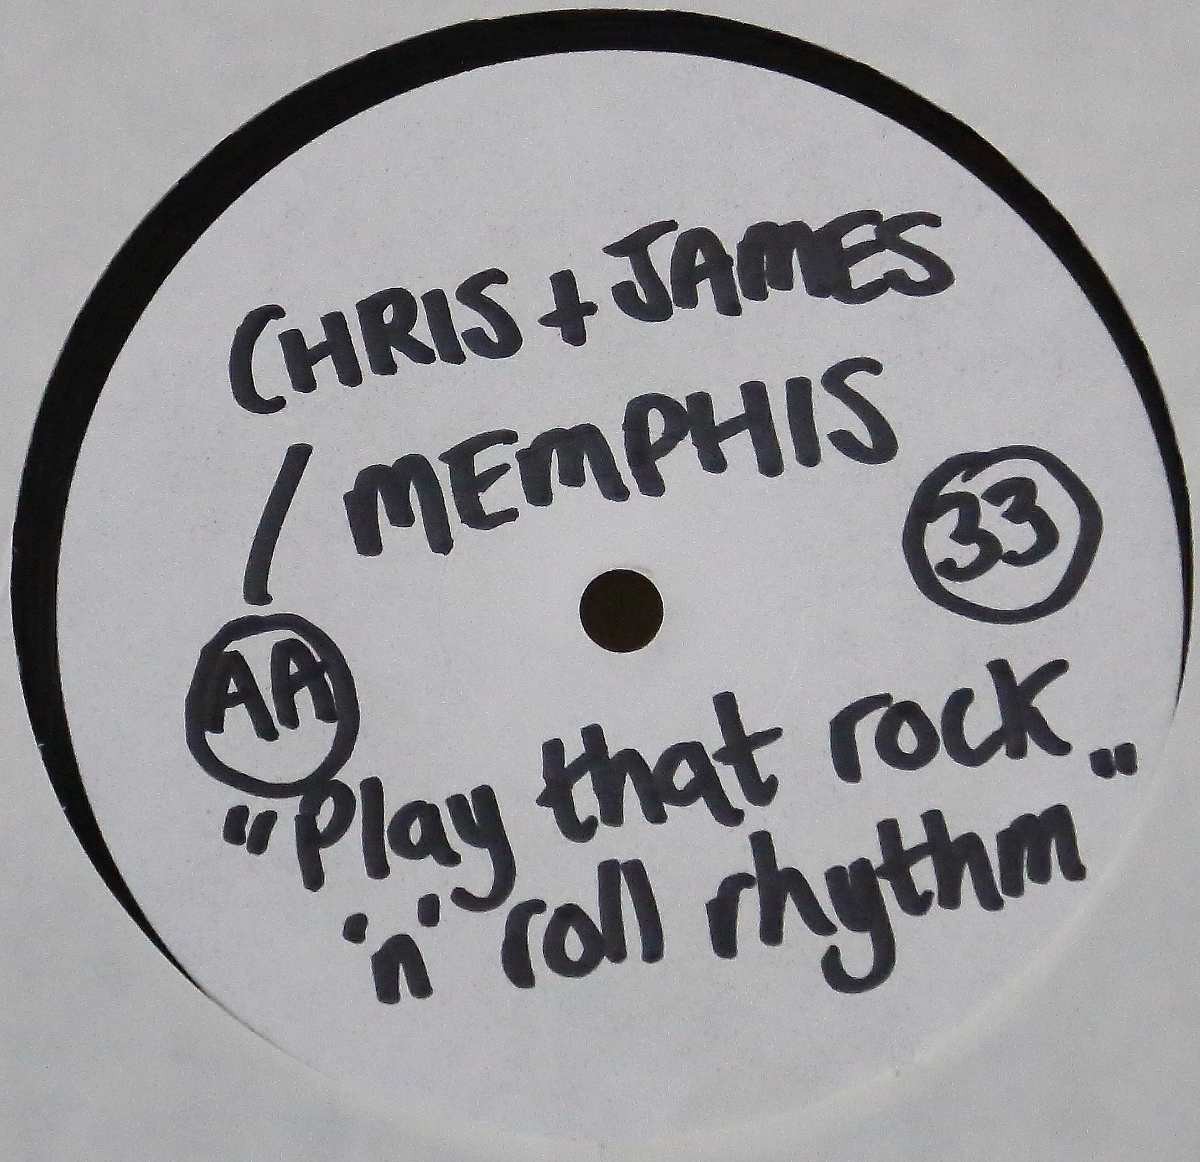 Delorme - Big fizz /  Chris & James Feat Memphis - Play That Rock N Roll Rhythm (12" Vinyl Promo)